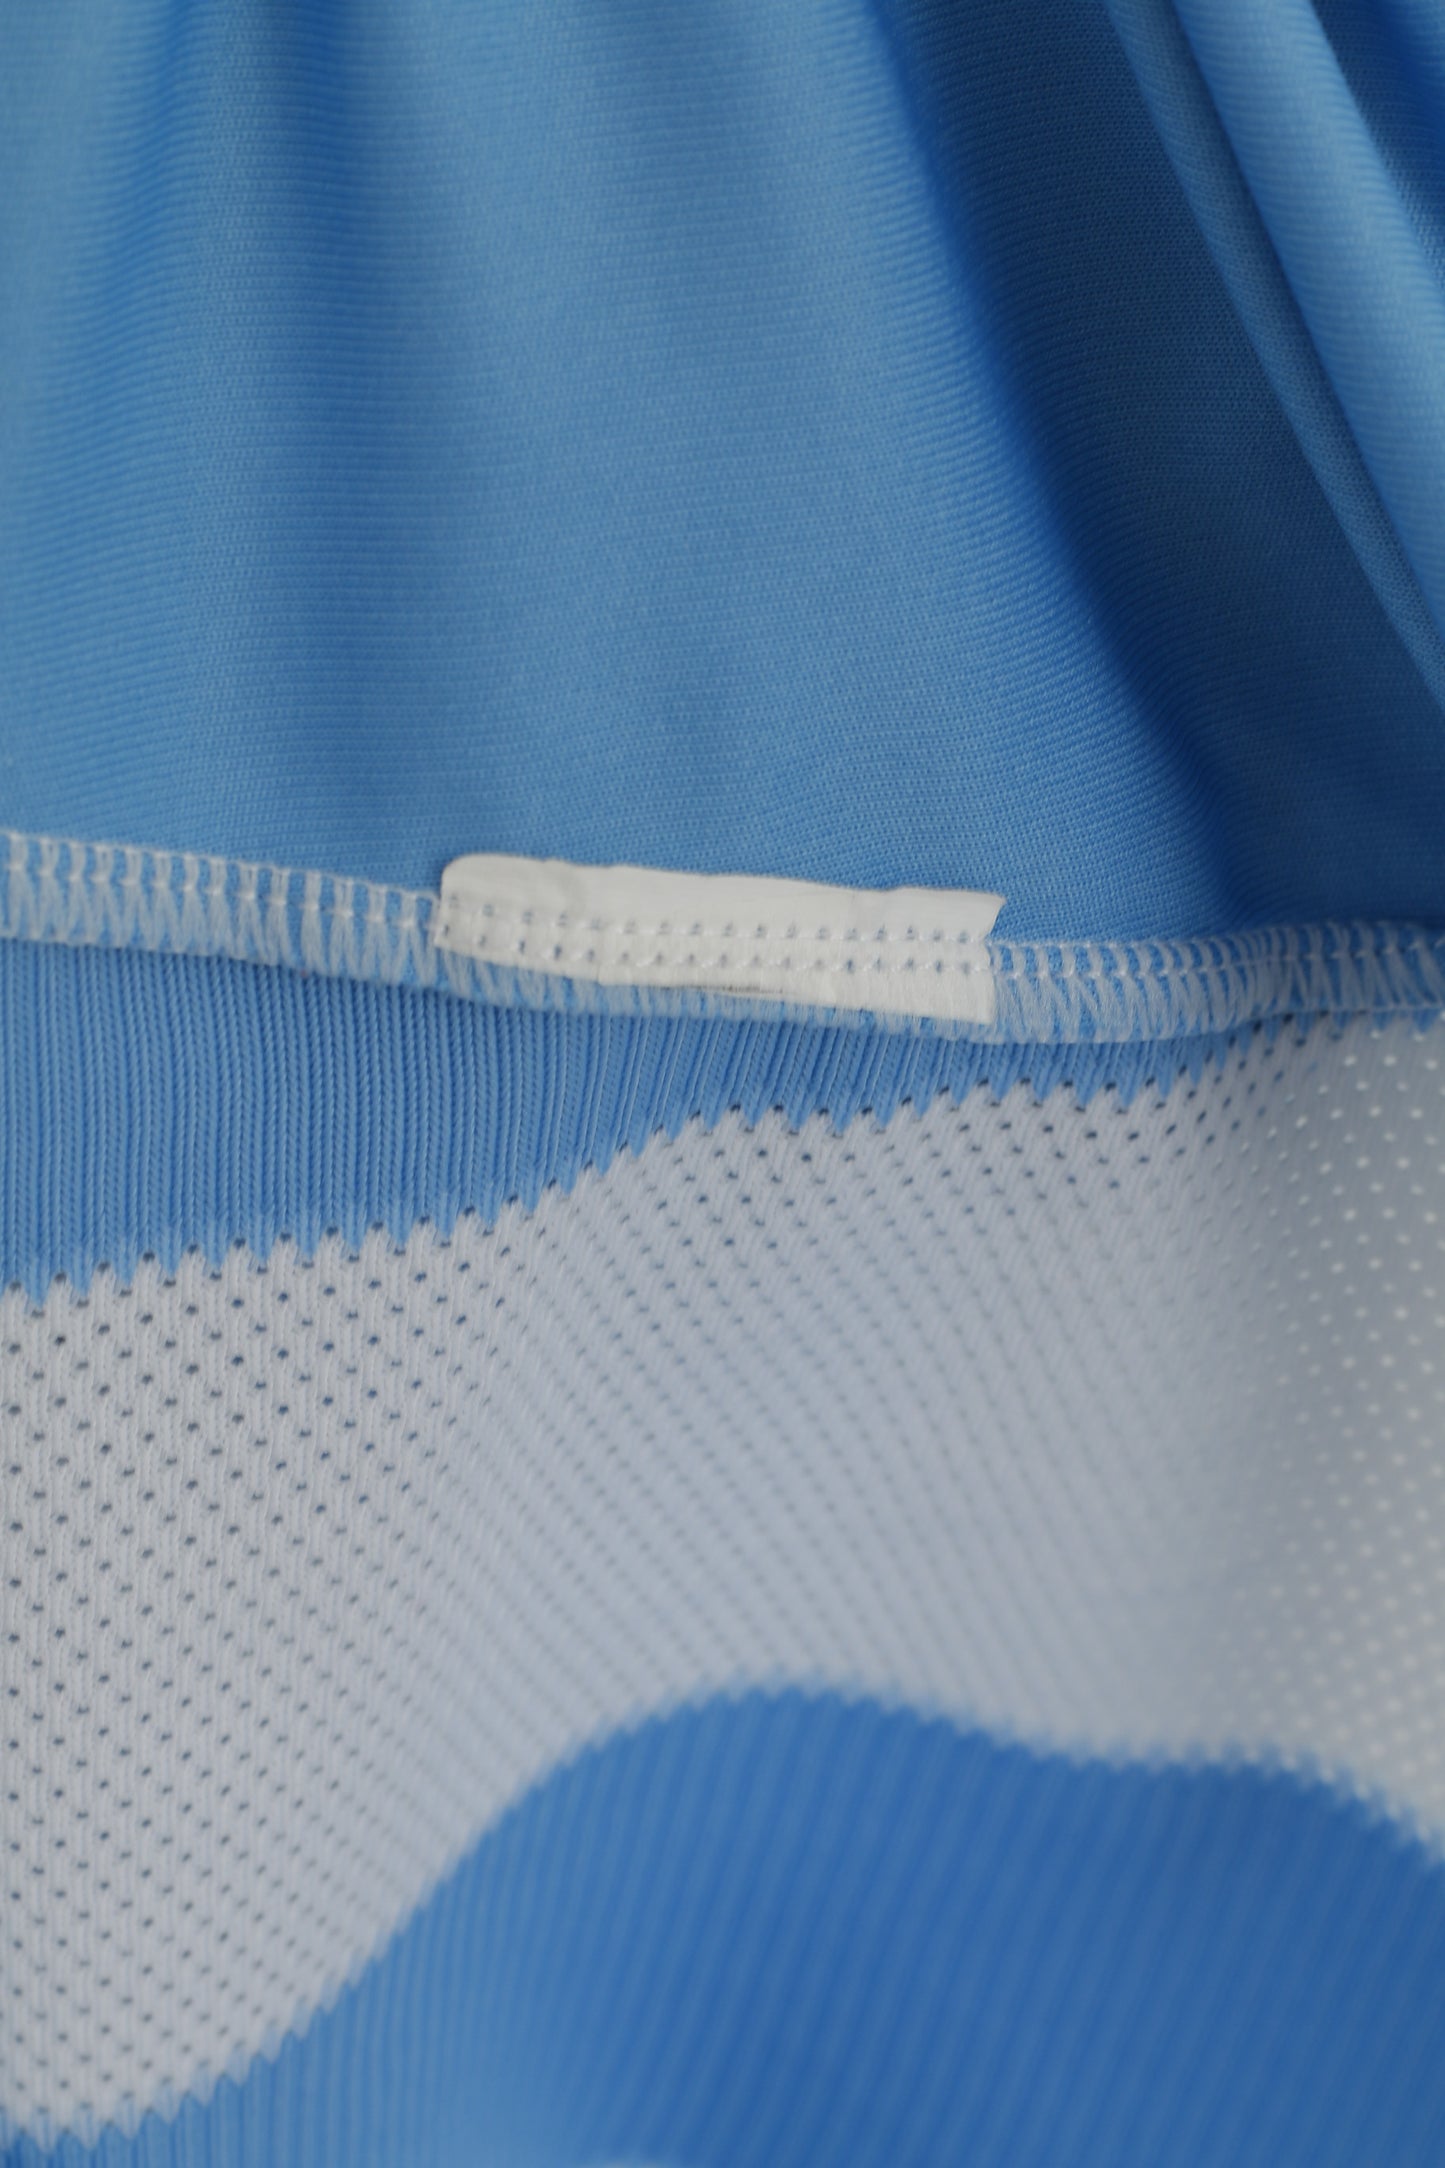 Maglia Adidas AFA da uomo M bianca blu a righe Argentina calcio calcio Trikot maglia vintage